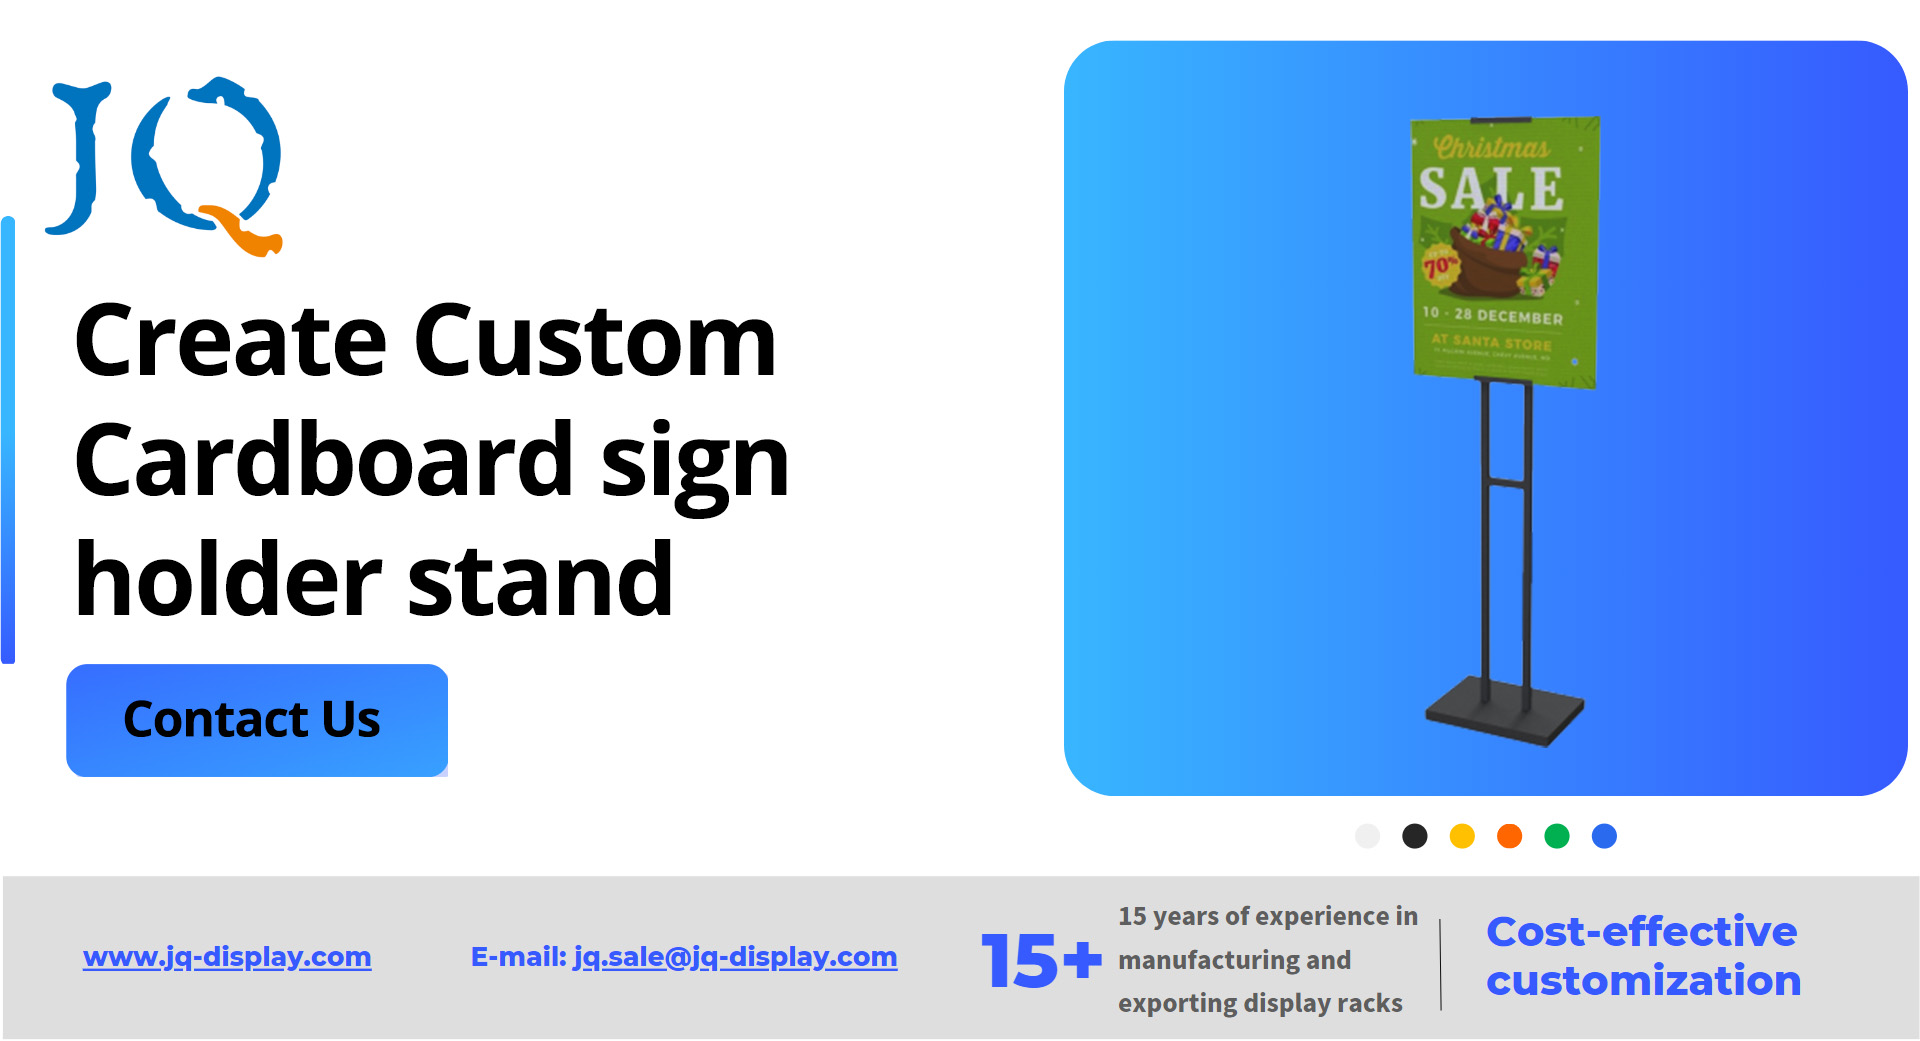 Create Custom Cardboard sign holder stand